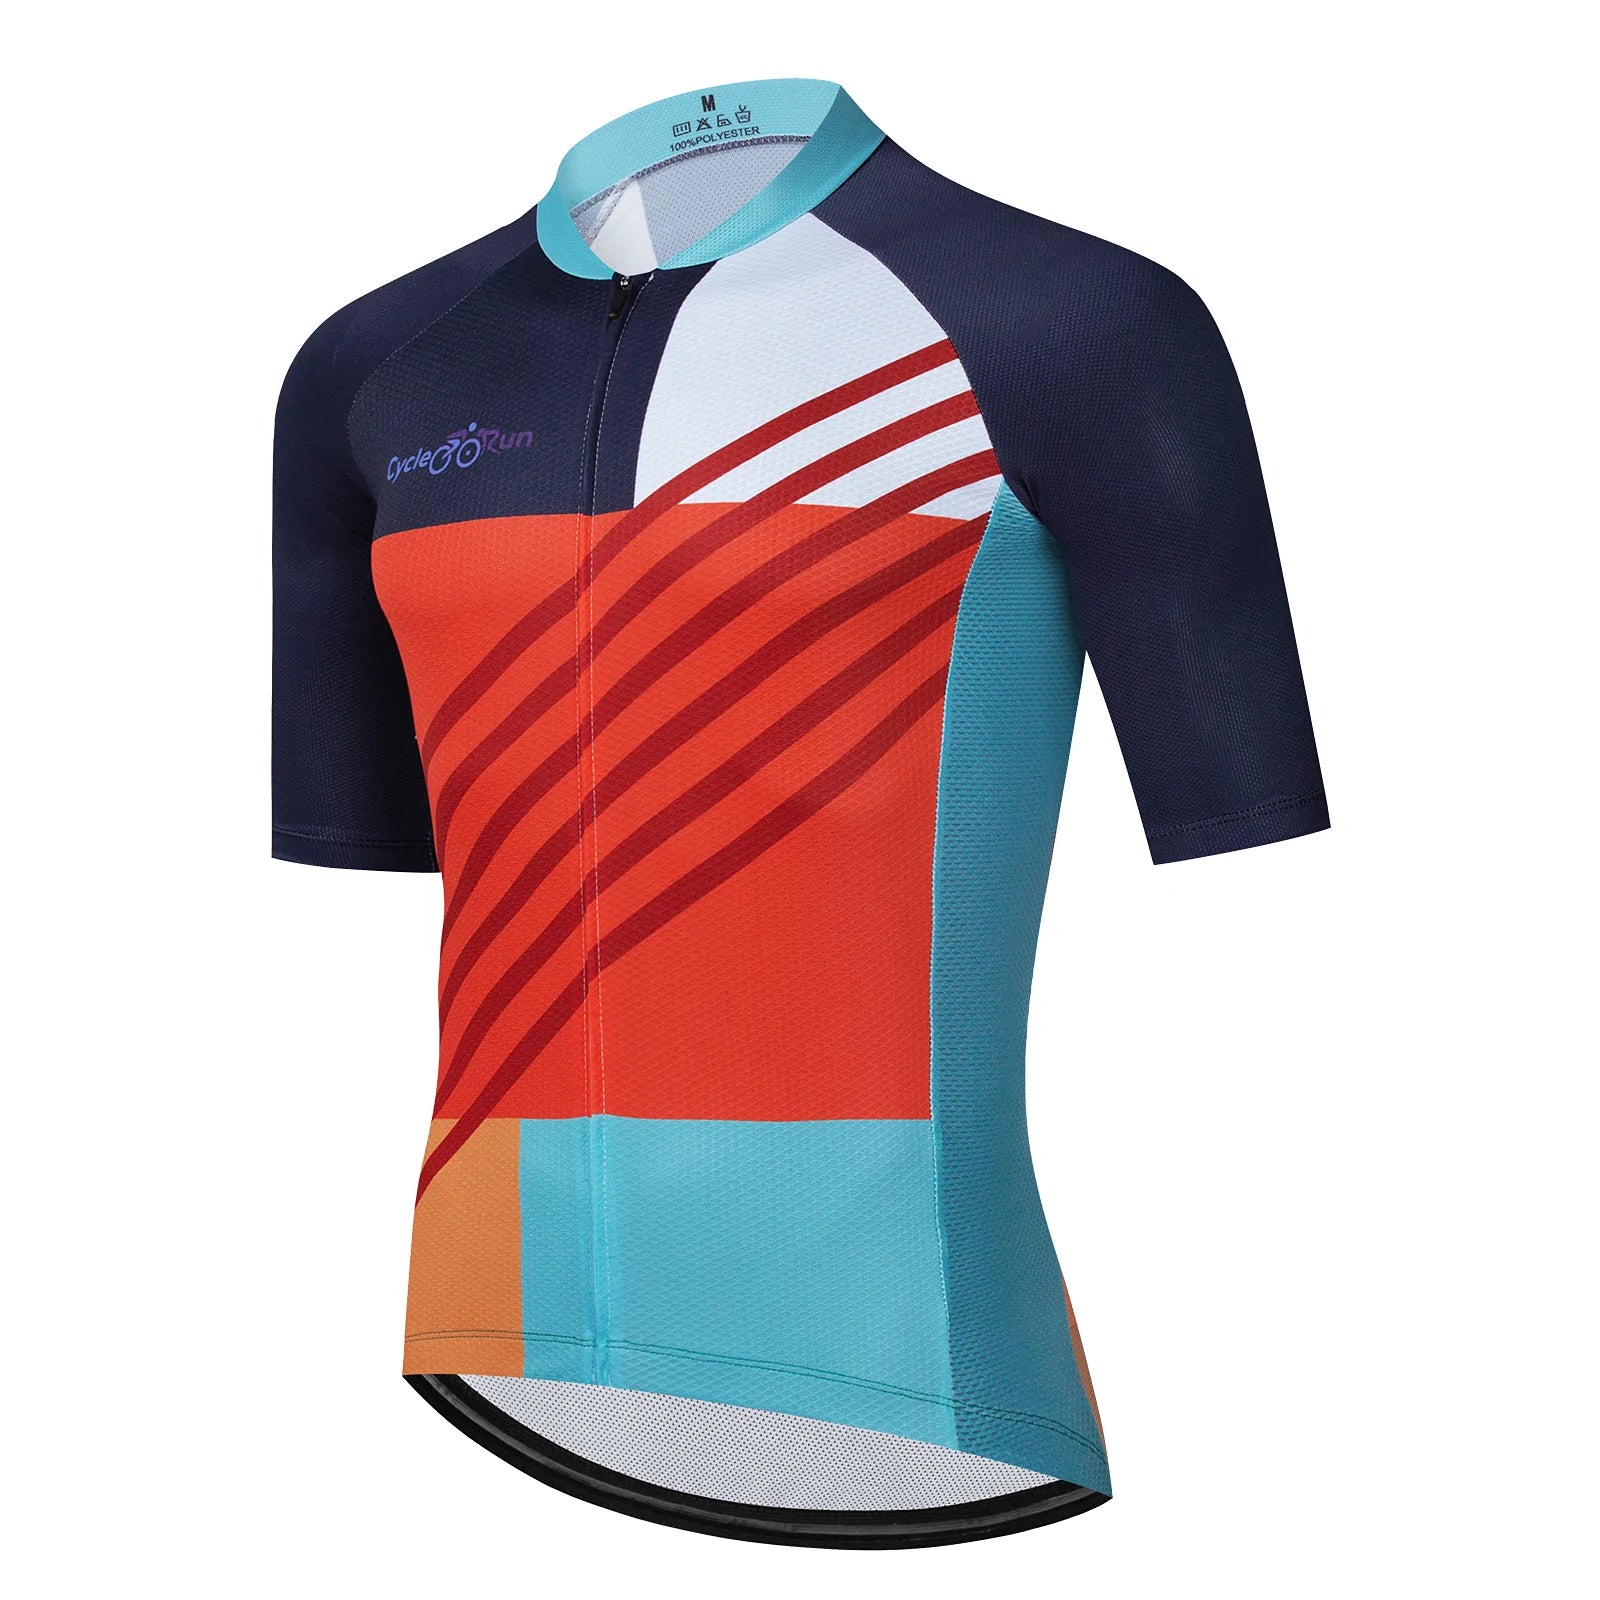 Solvi cycling jersey for women